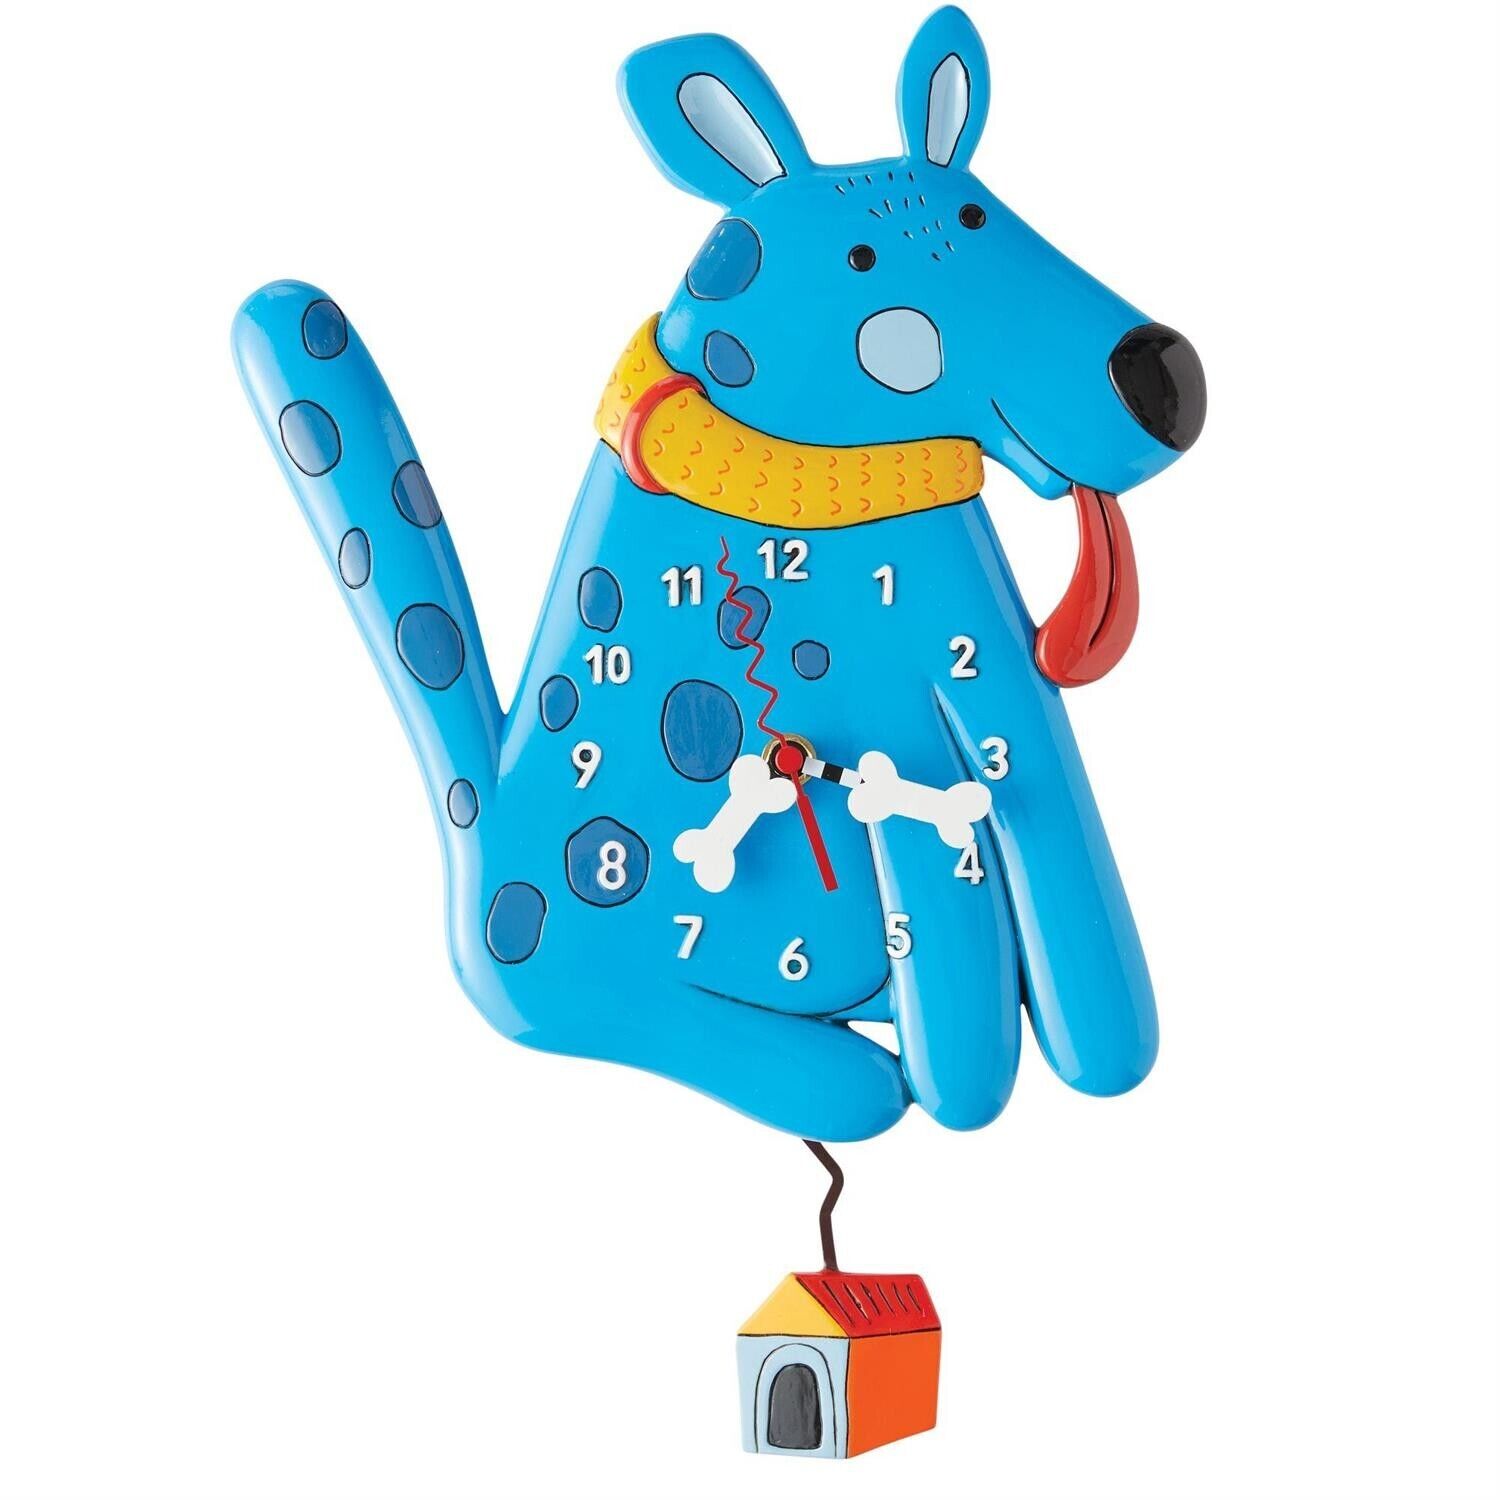 Allen Design Studio Wall Clock: Blue Buddy Dog, Item# 6015360